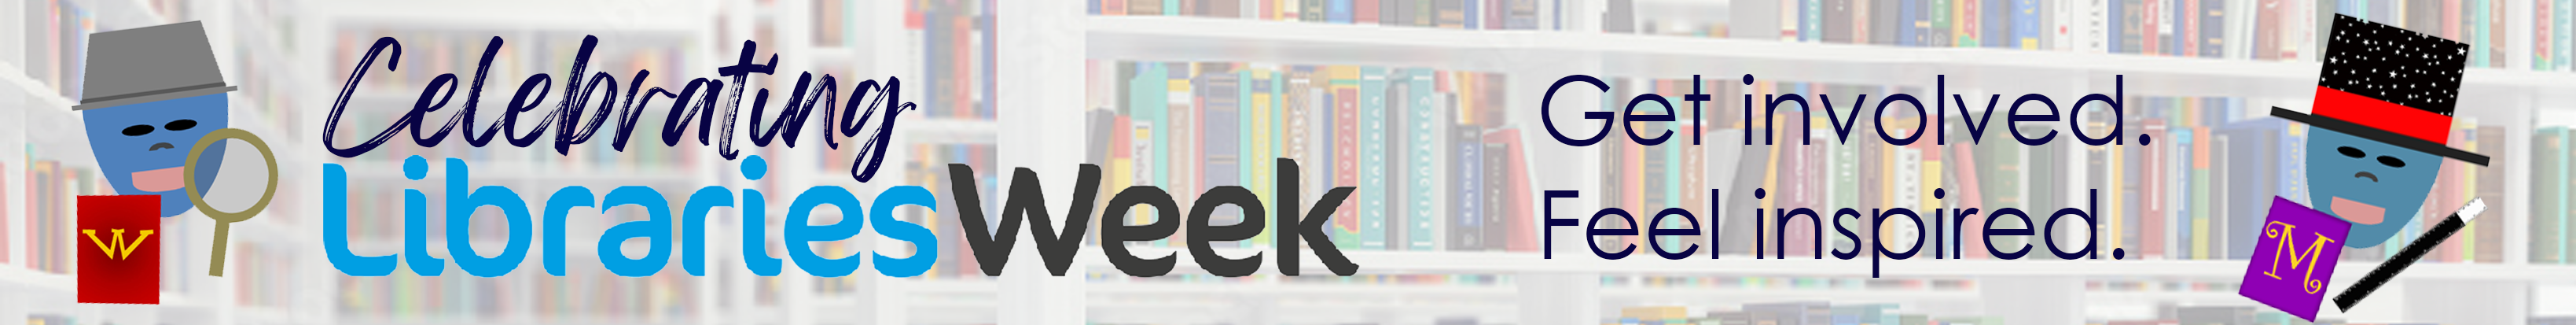 Celebrating Libraries Week - Get involved. Feel inspired.